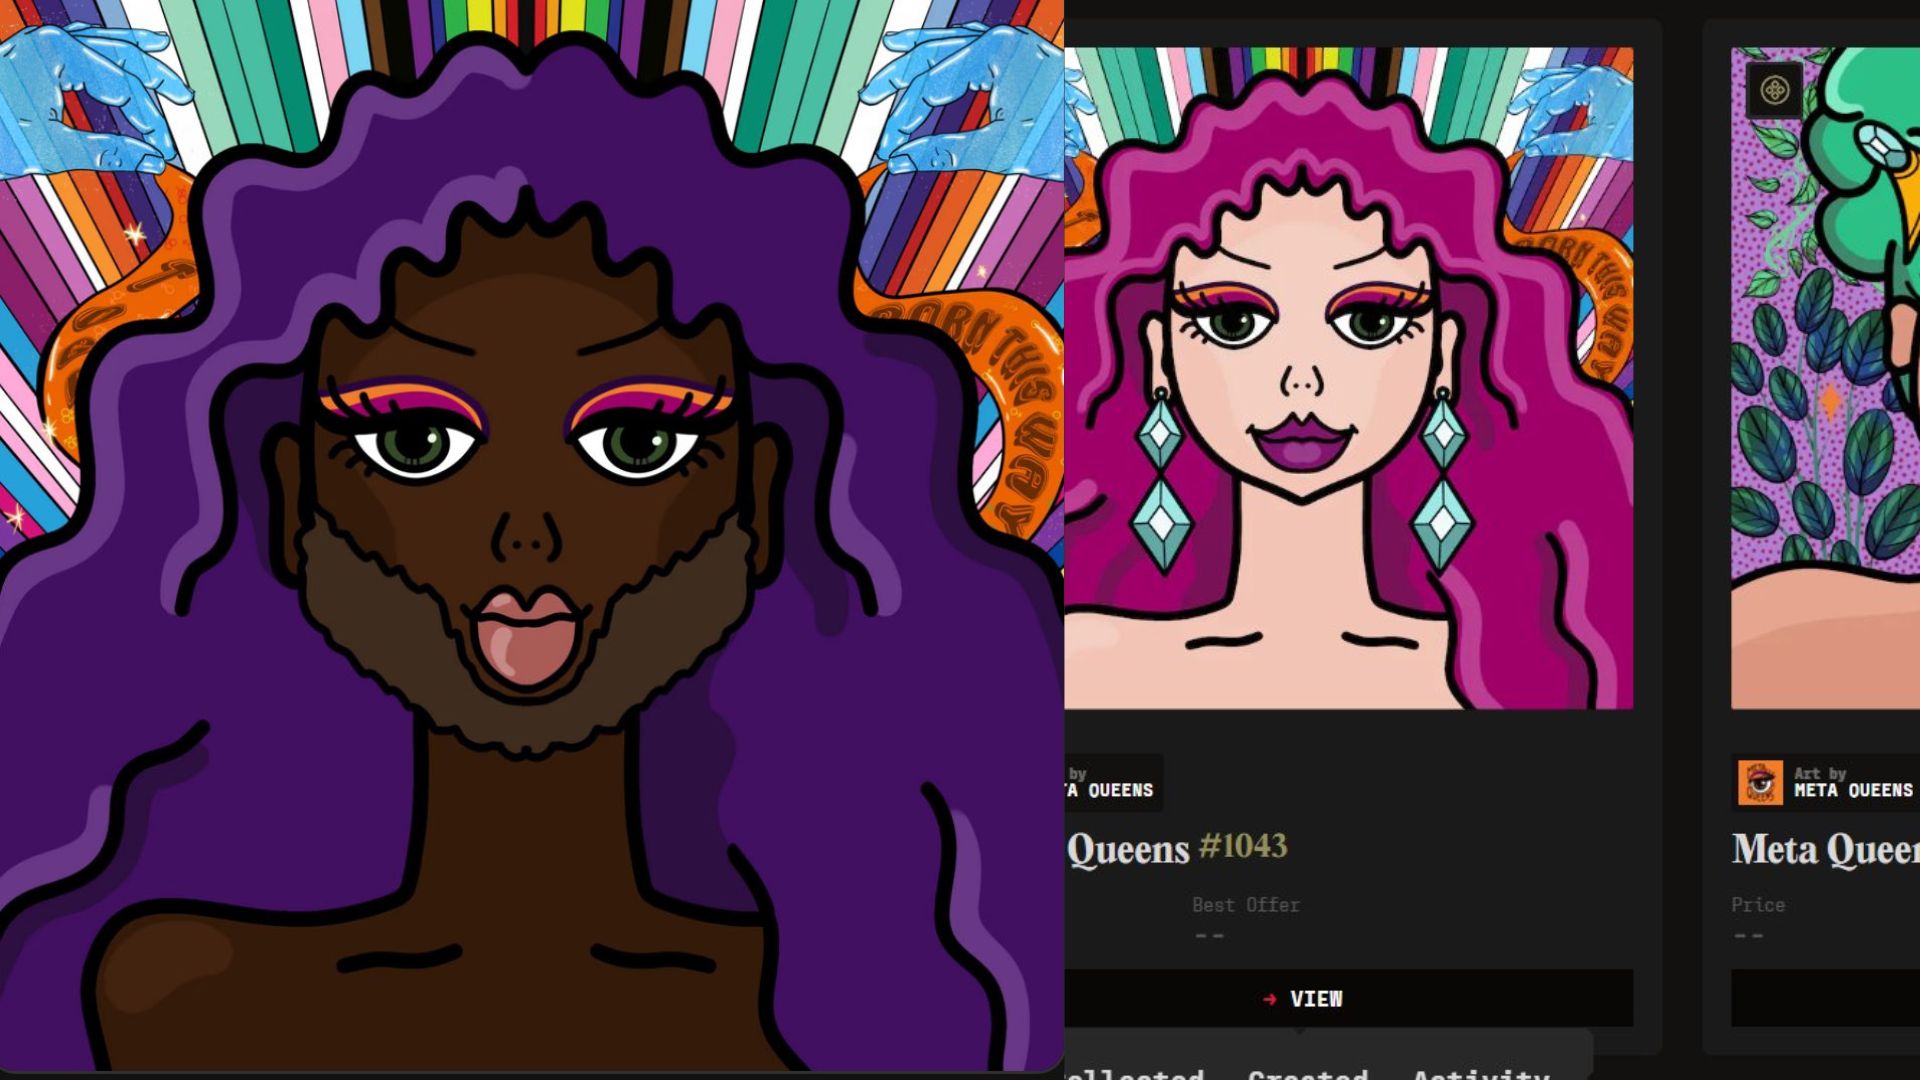 Screenshot of Meta Queens’ cross-dressing LGBTQ art banned from the market